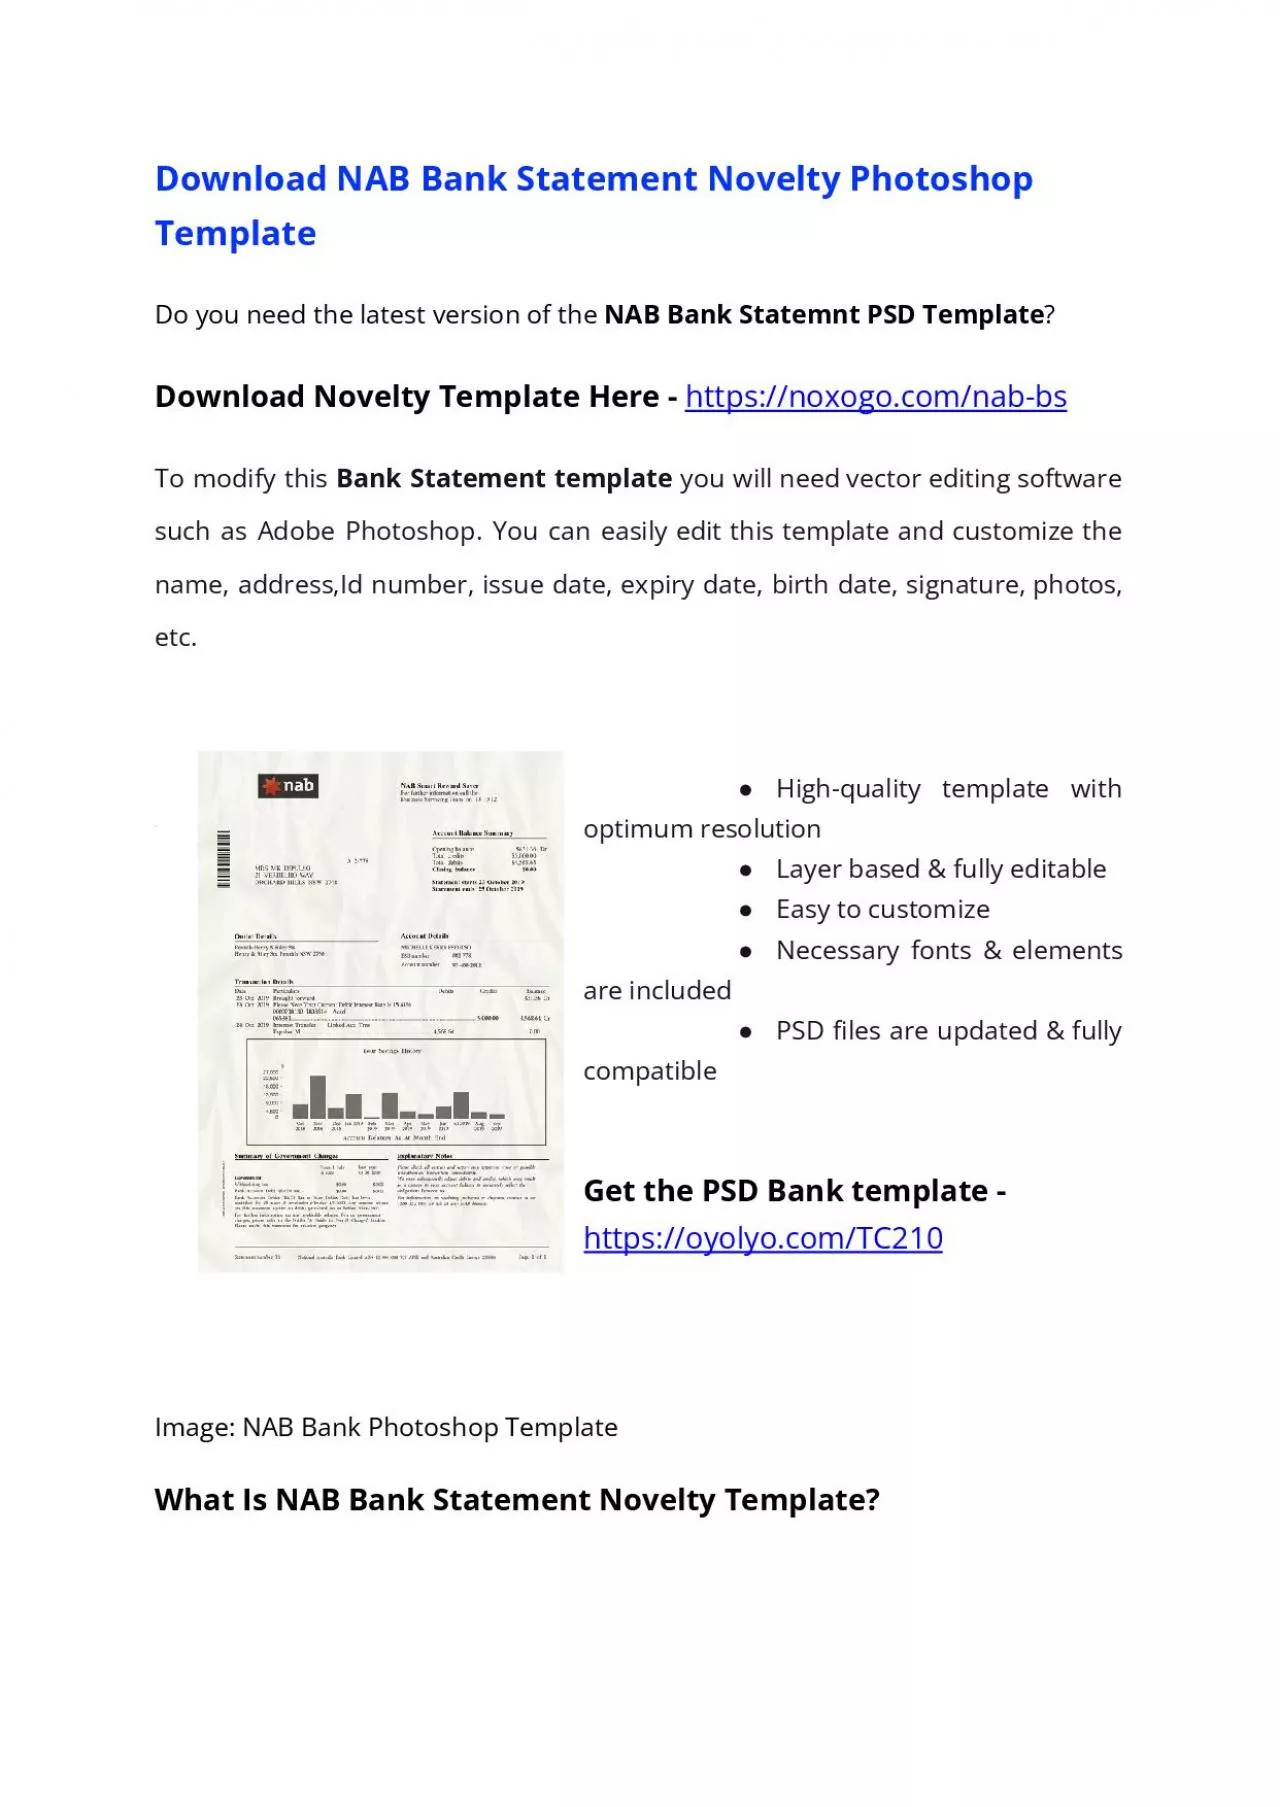 NAB Bank Statement PDF Template – Download